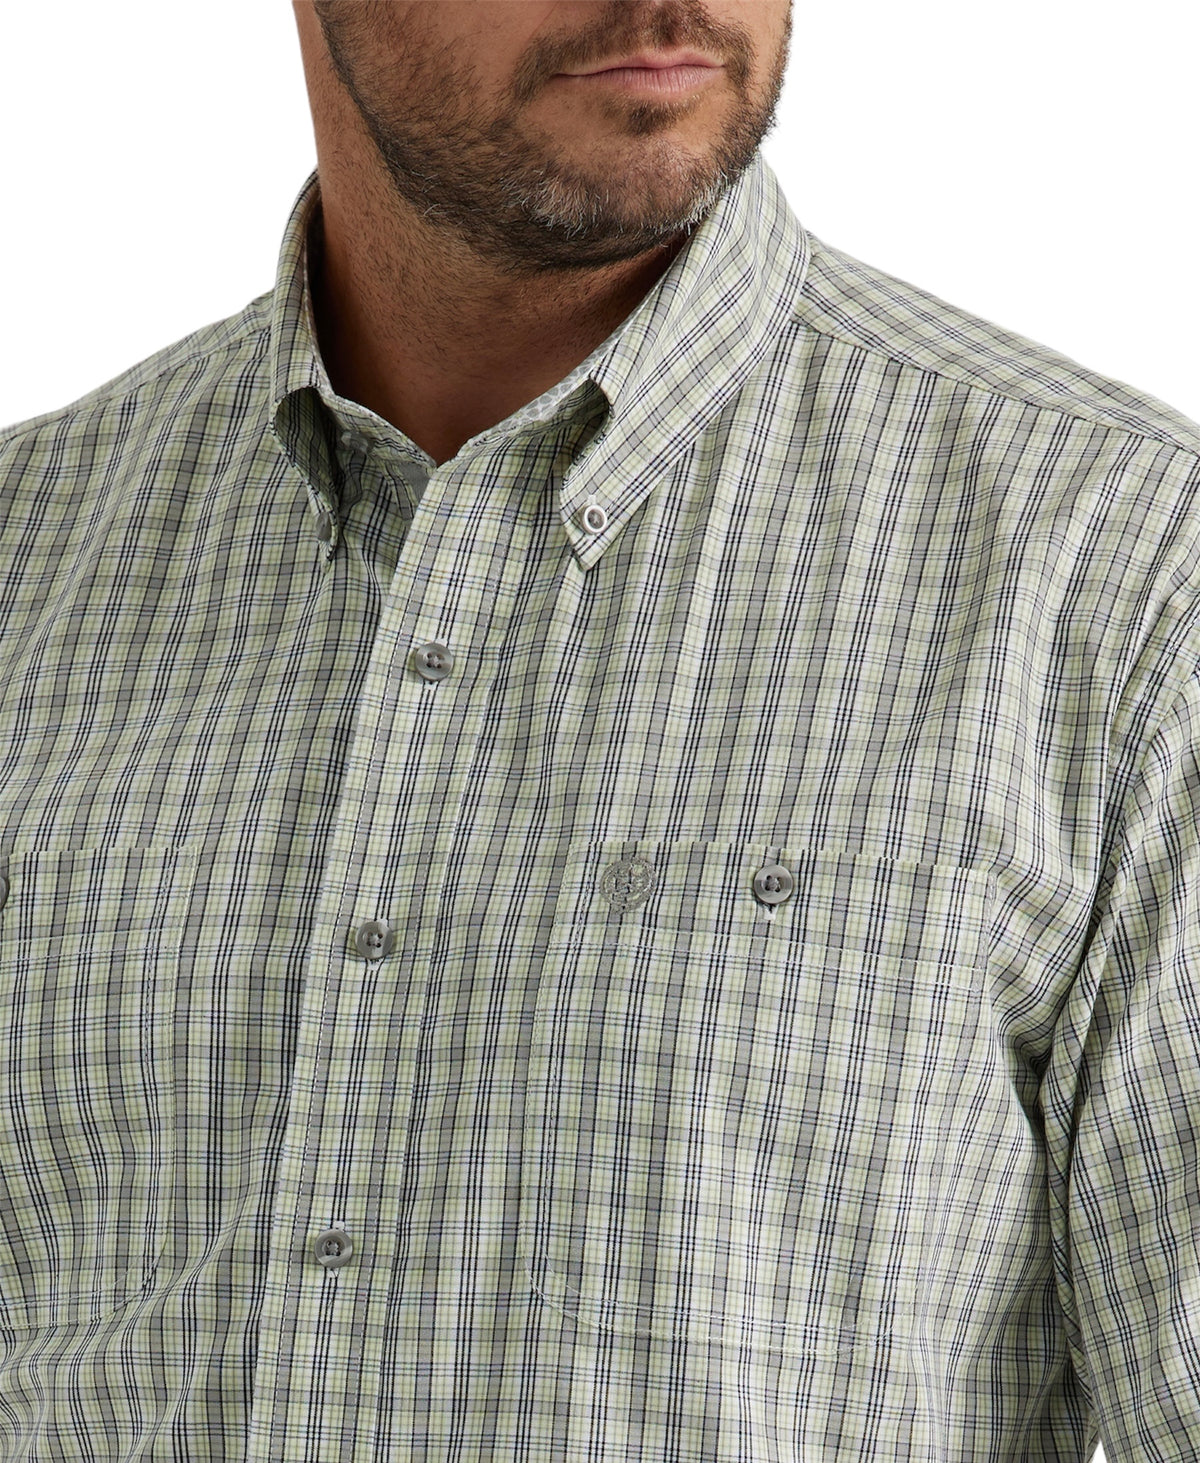 Men's Wrangler Short Sleeve Sage Plaid Shirt